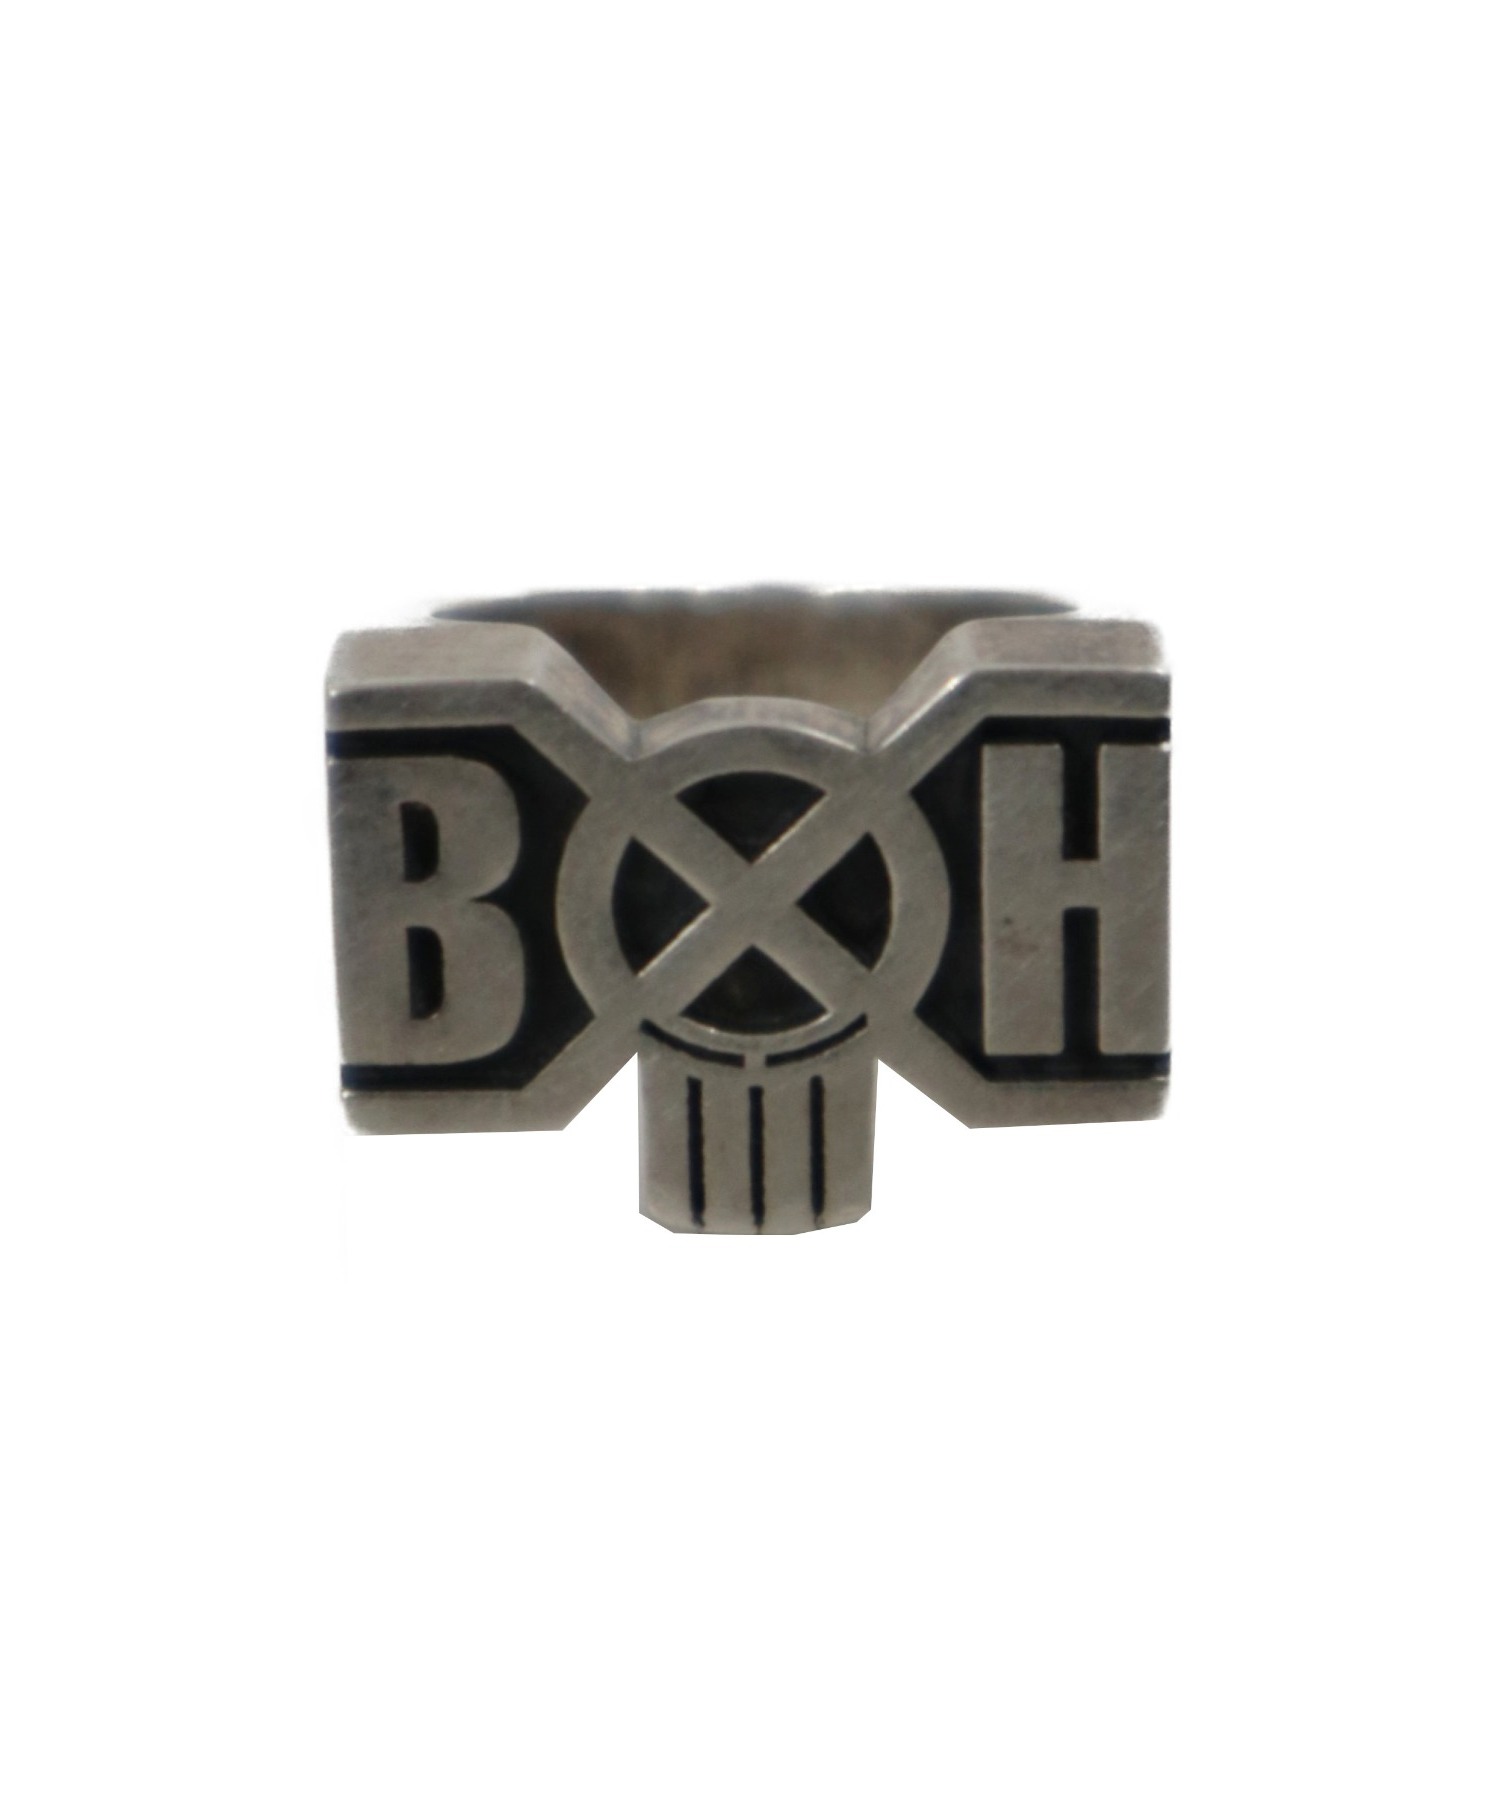 BOUNTY HUNTER (バウンティーハンタ) ボックスロゴリング サイズ:下記参照 SILVER925　BxH Logo Ring